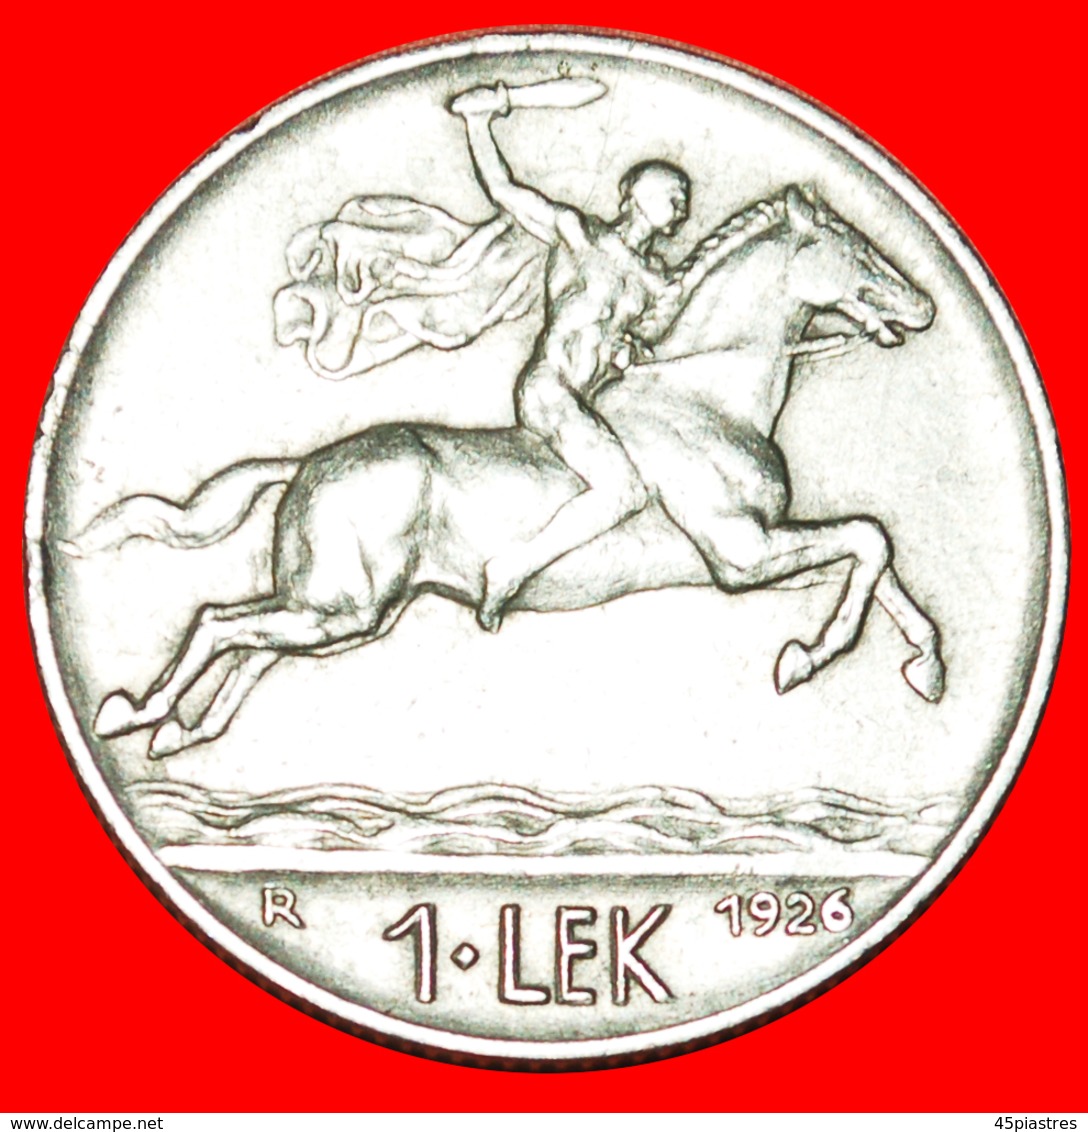 + ITALY: ALBANIA  1 LEK 1926R! ALEXANDER THE GREAT (336-323 BCE)! LOW START  NO RESERVE! - Albania